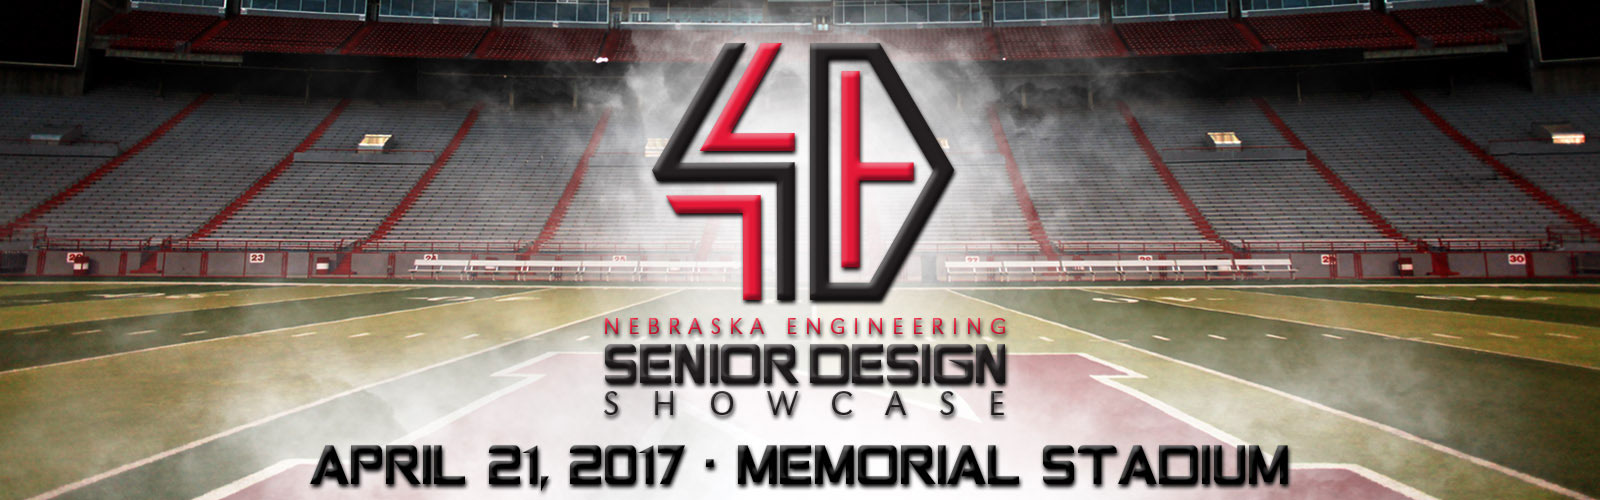 Senior Design Showcase set for April 21